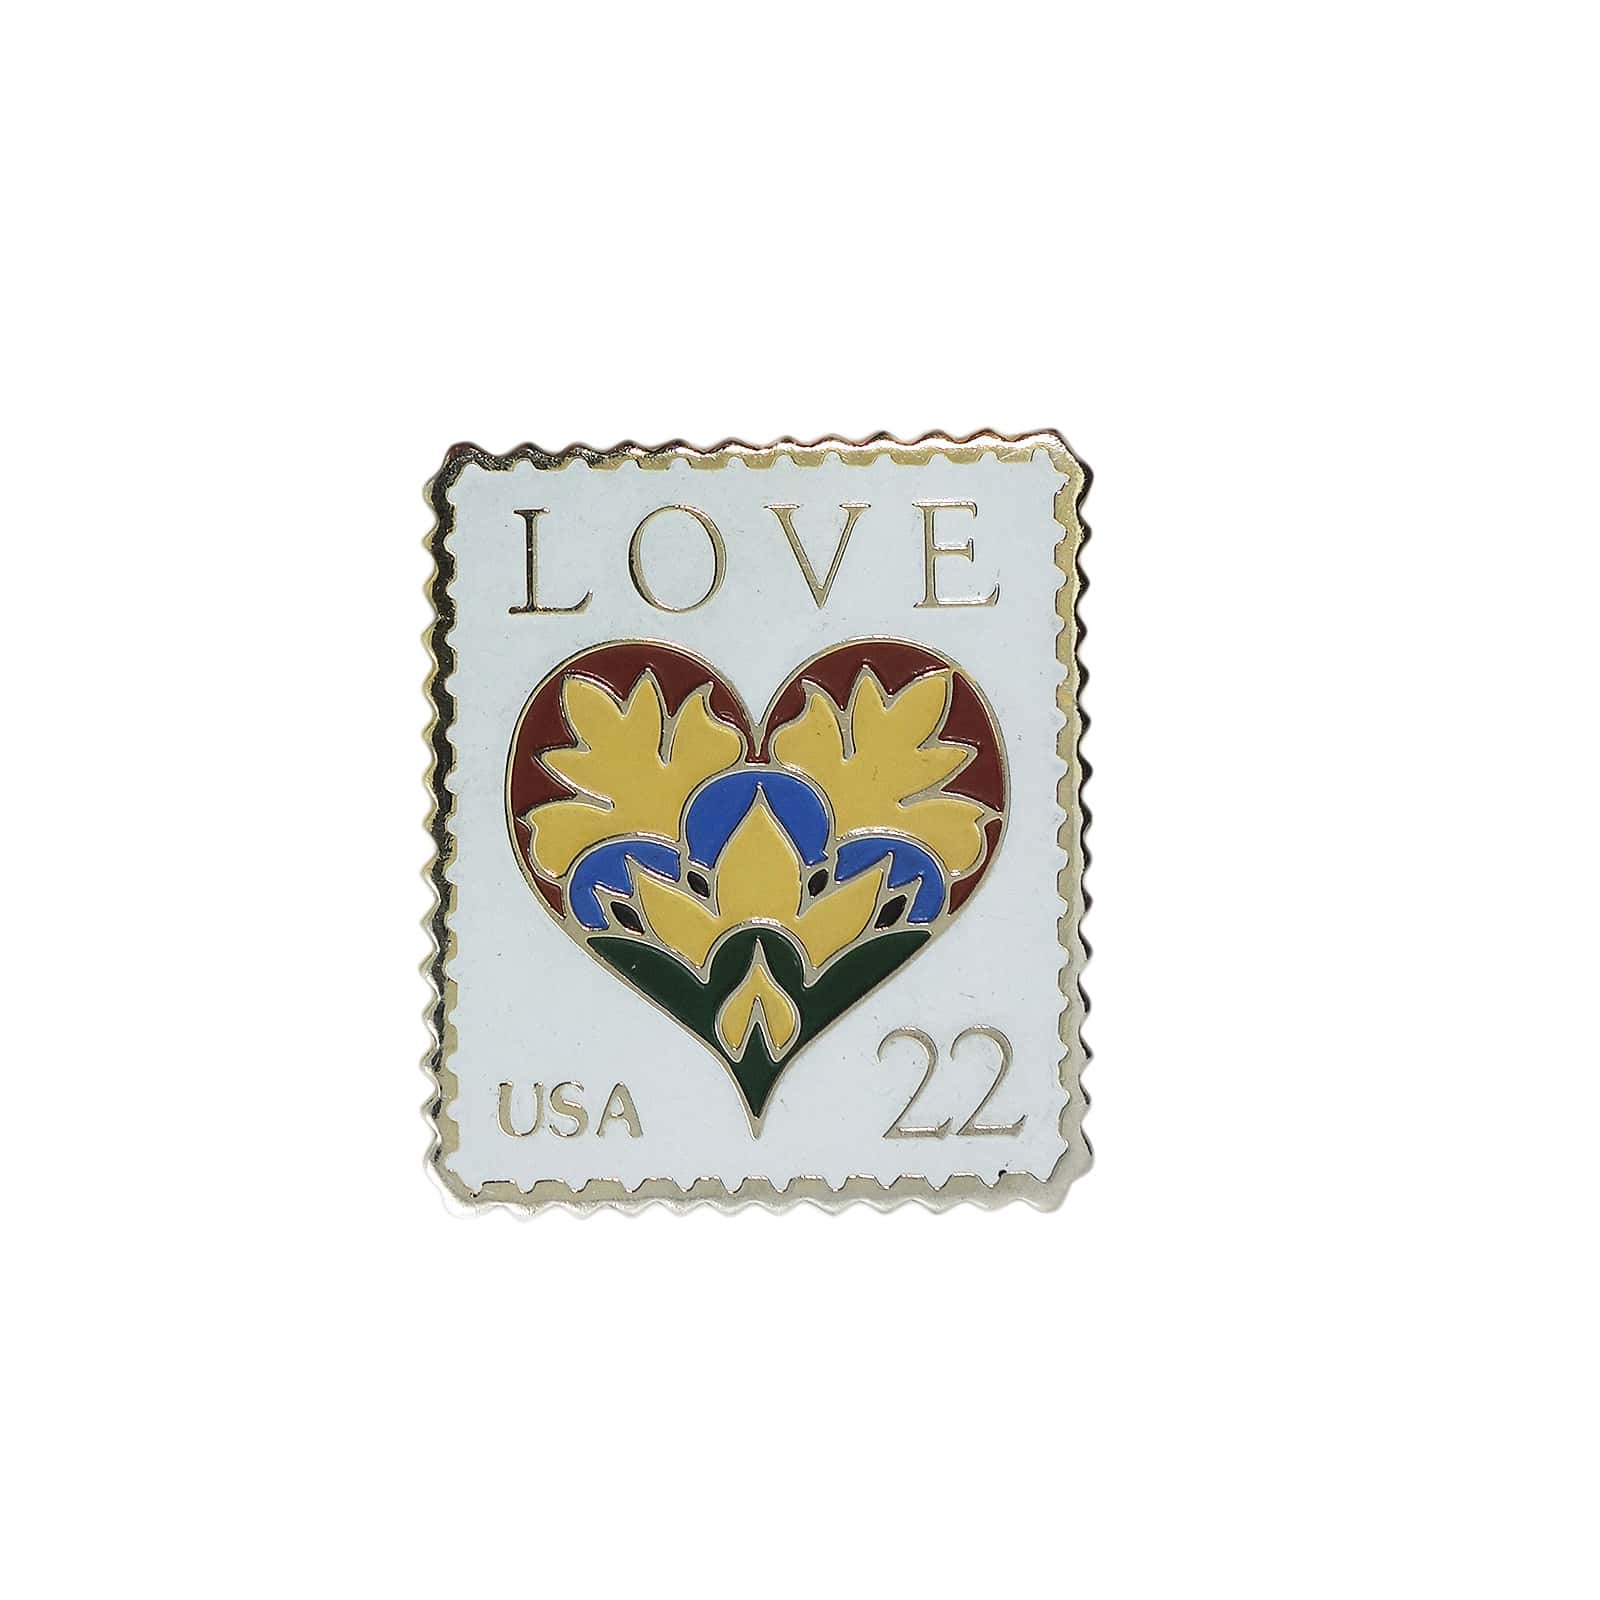 LOVE USA 22 切手型 ピンズ ハート 留め具付き